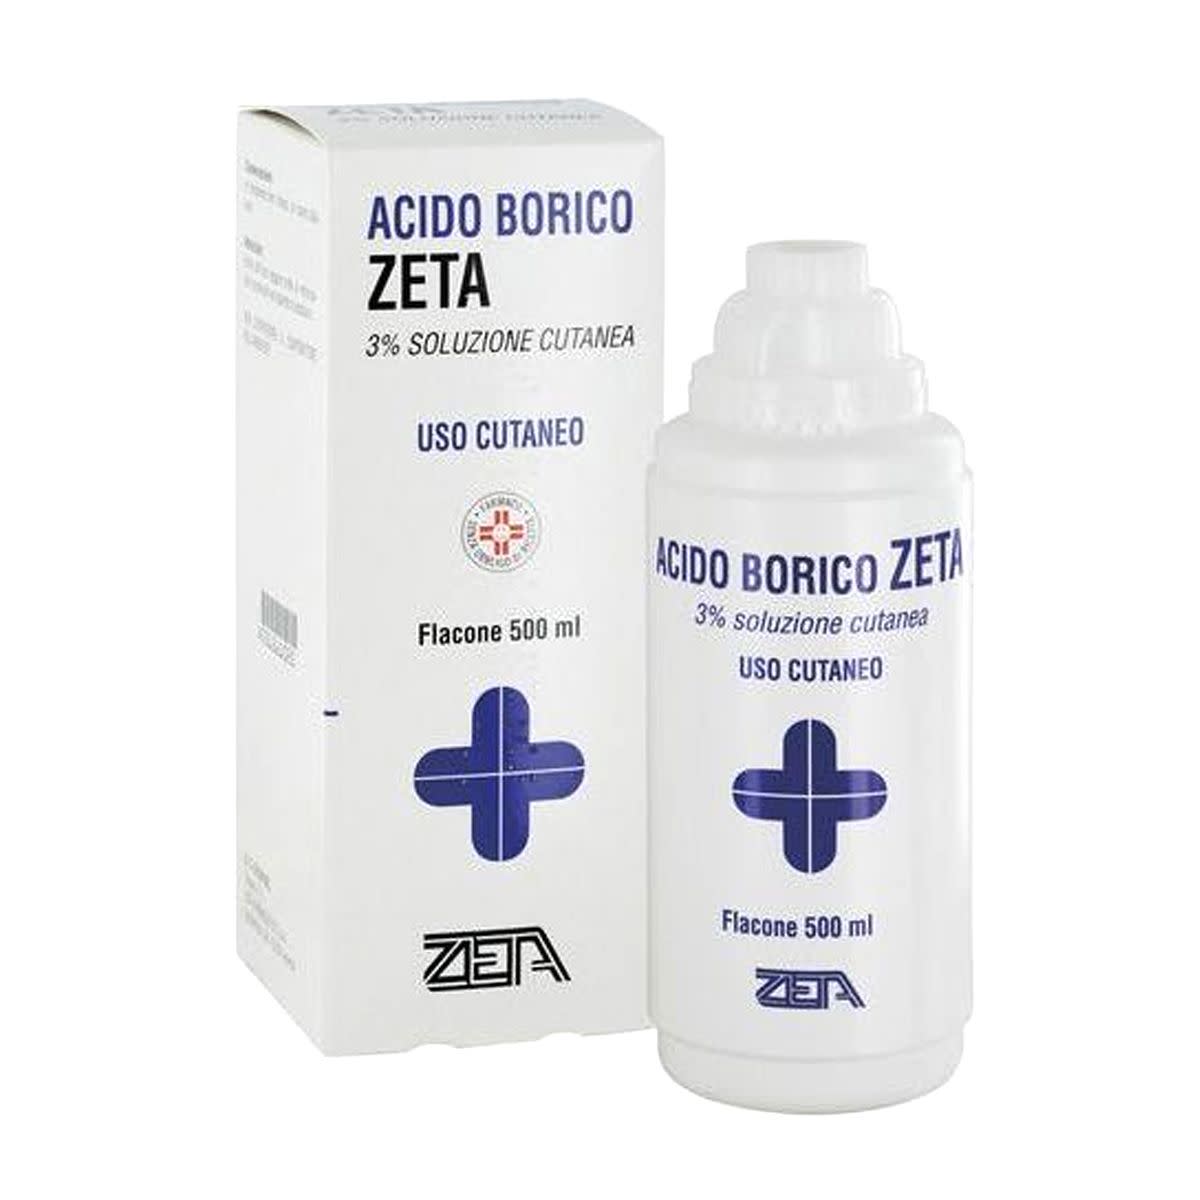 031361025 - Zeta Acido Borico 3% Disinfettante cute 500ml - 7848388_2.jpg